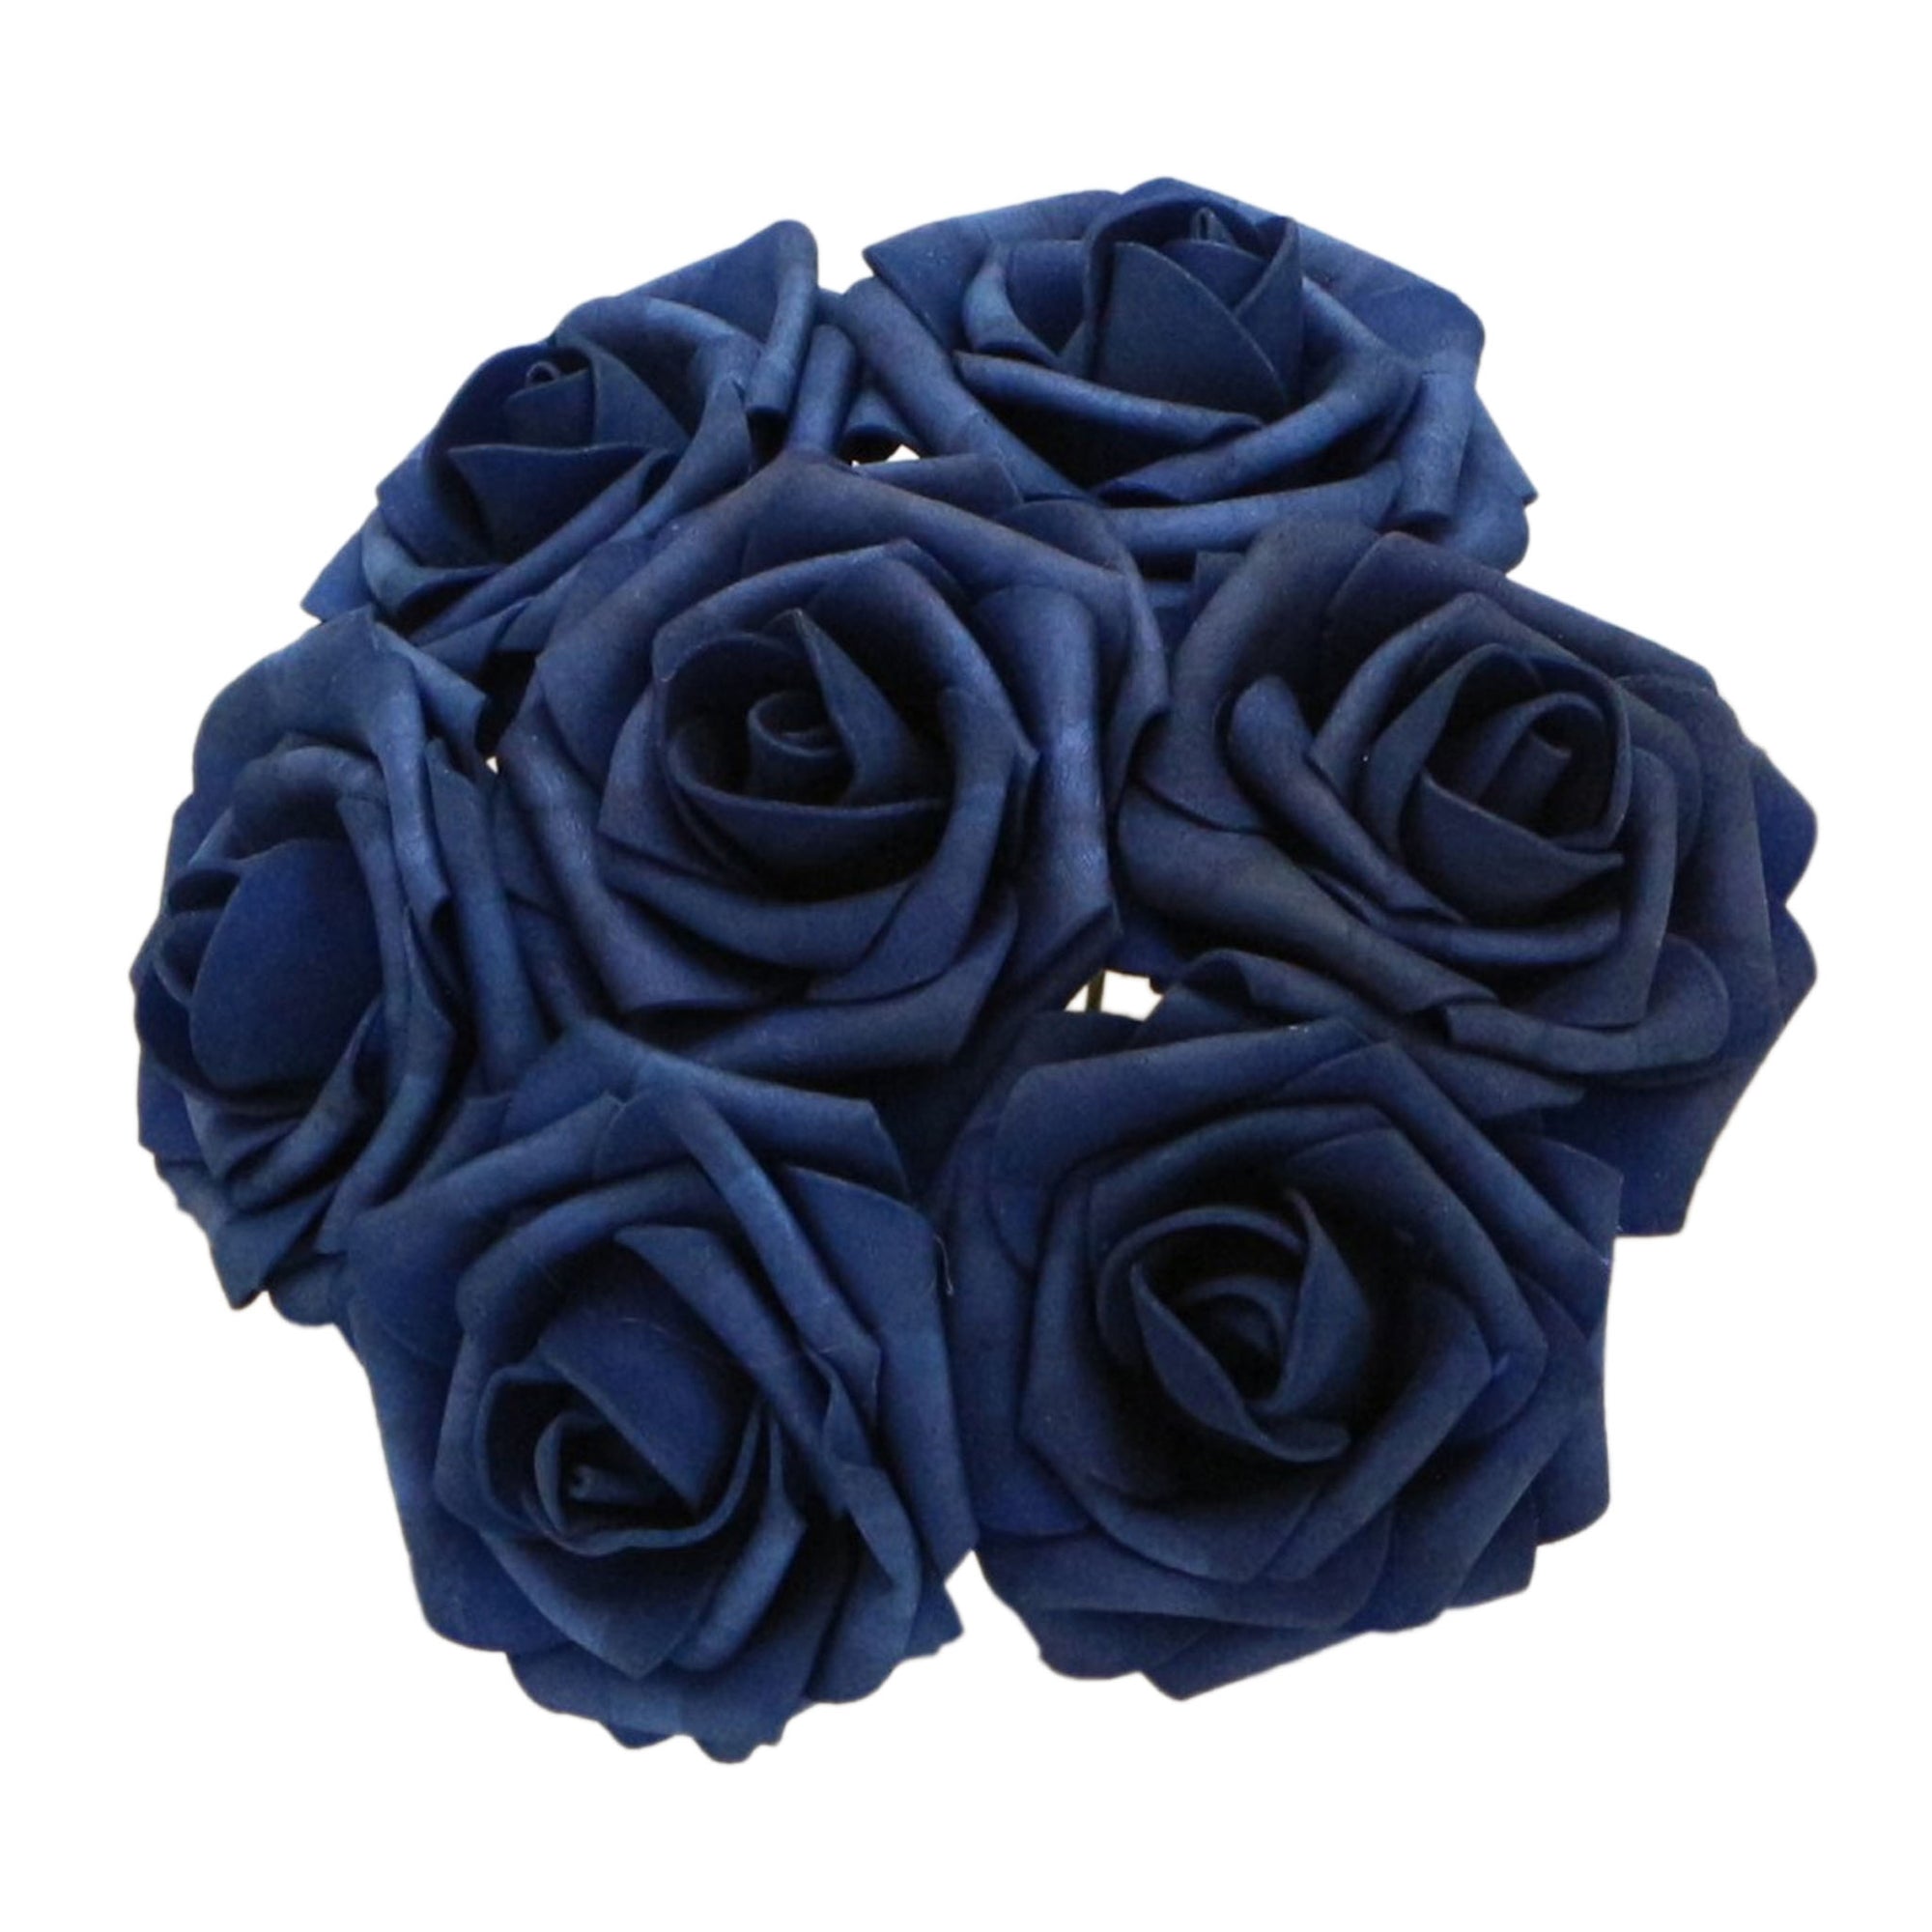 Navy Blue Roses Artificial Bulk Flowers for Wedding